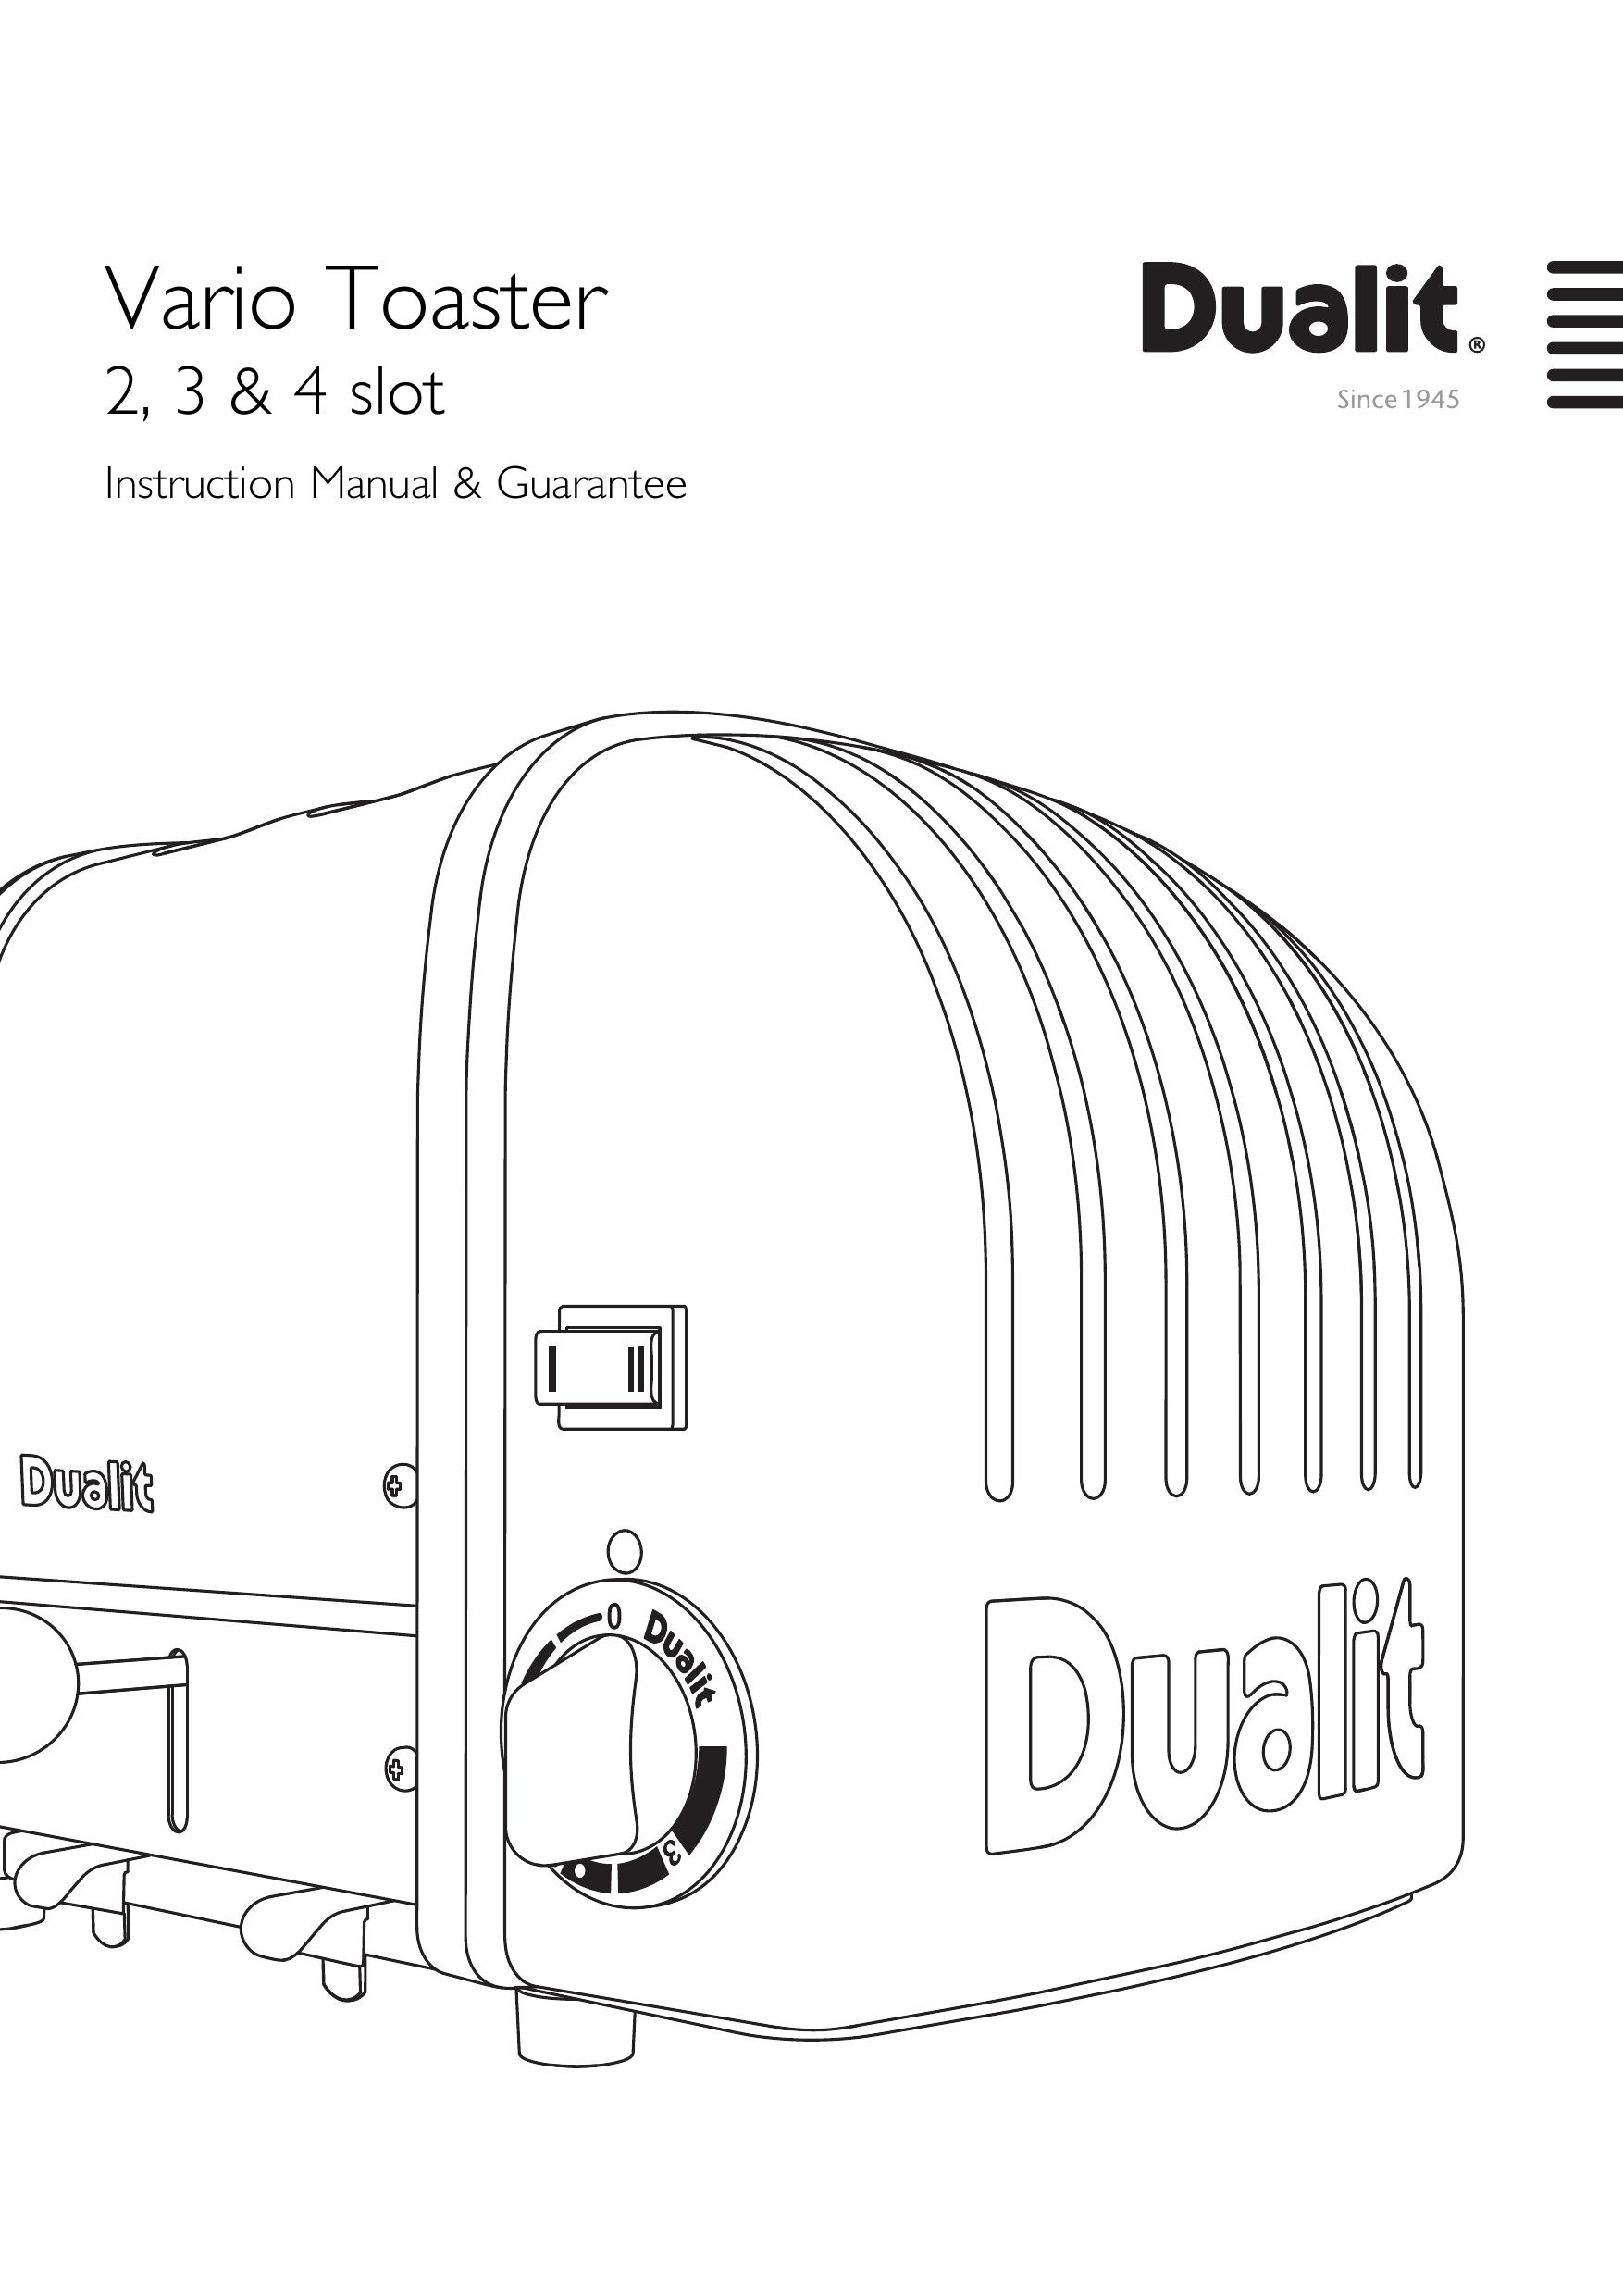 Dualit 27165 Toaster User Manual